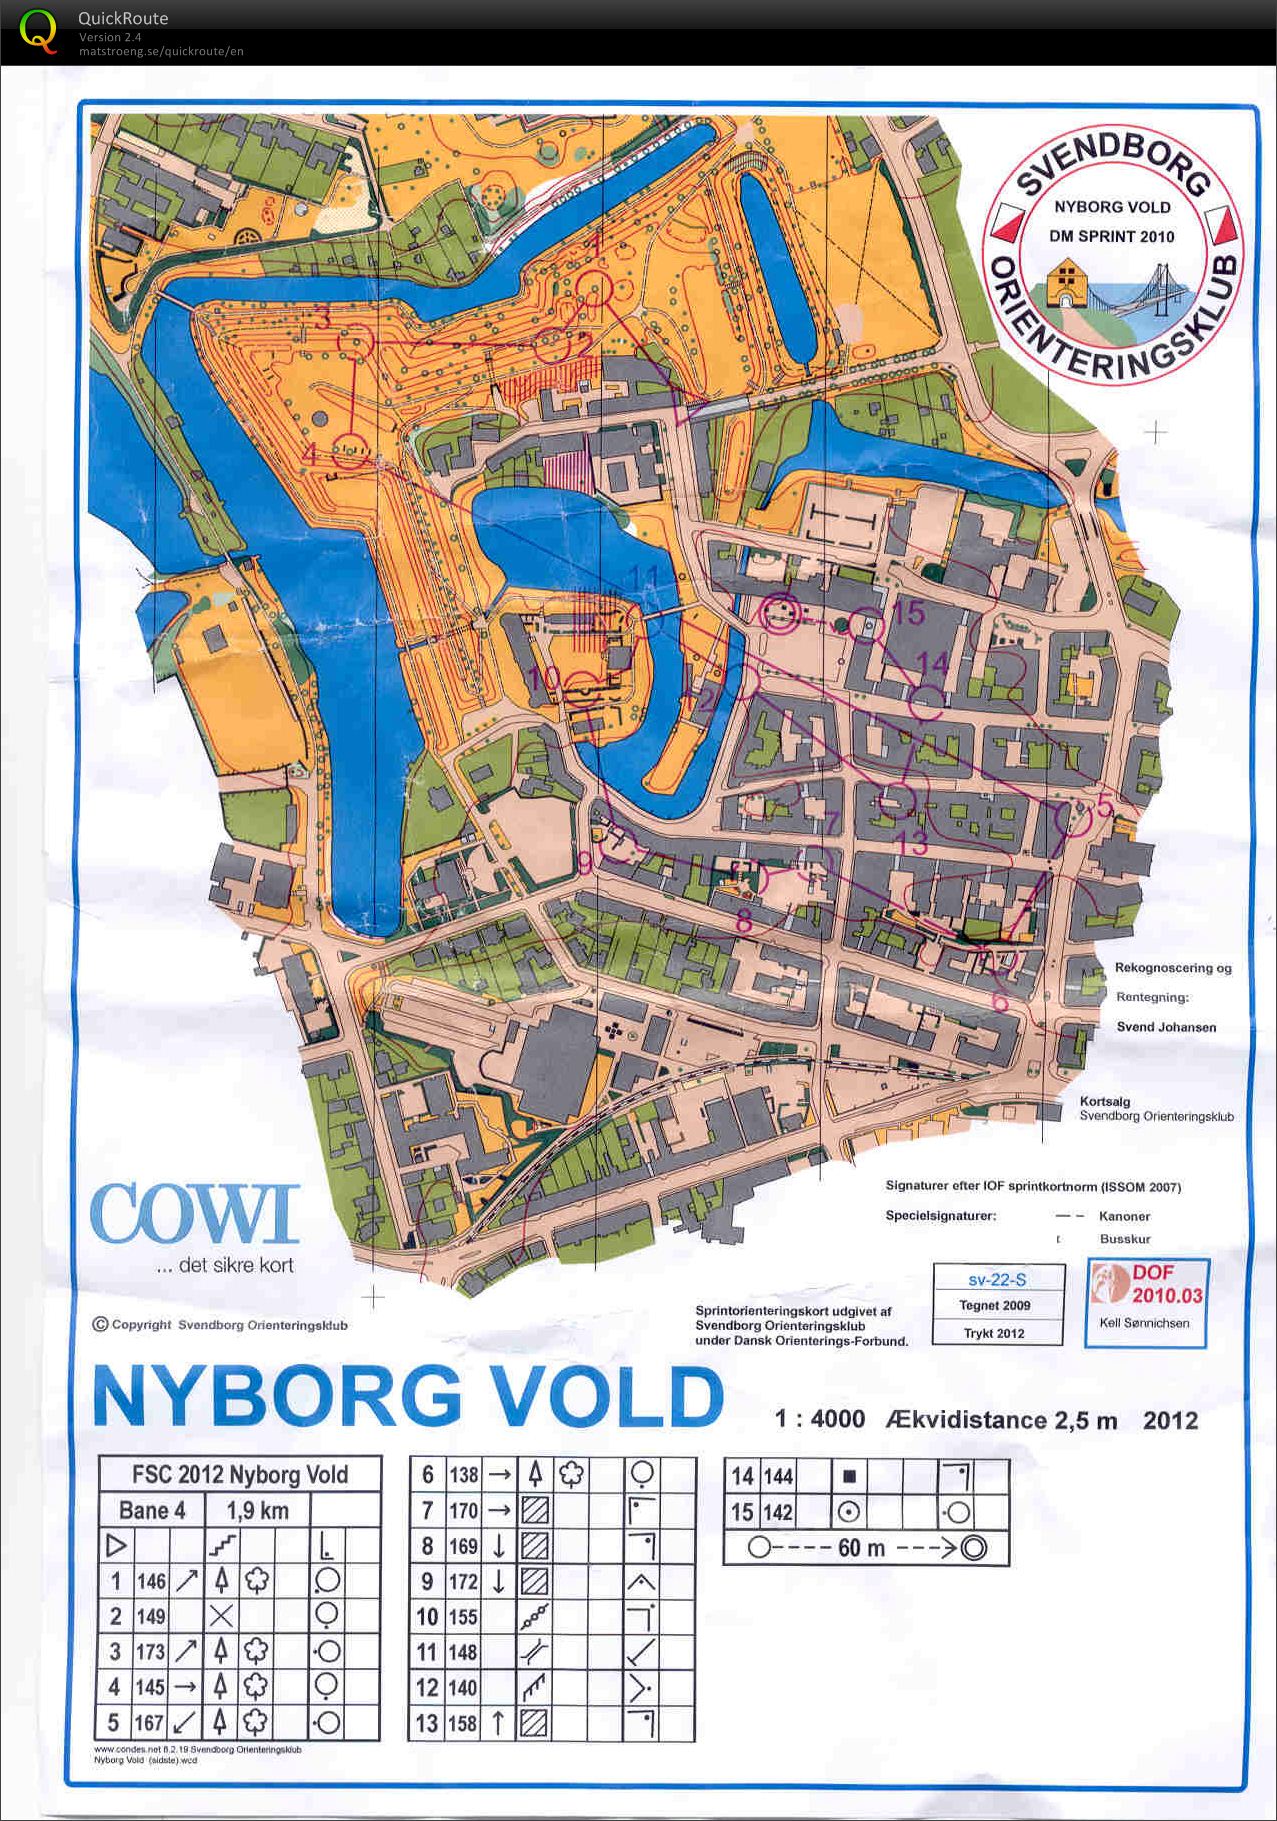 Nyborg Vold, Bane 4, D55, Pia Gade, 280512 (28.05.2012)